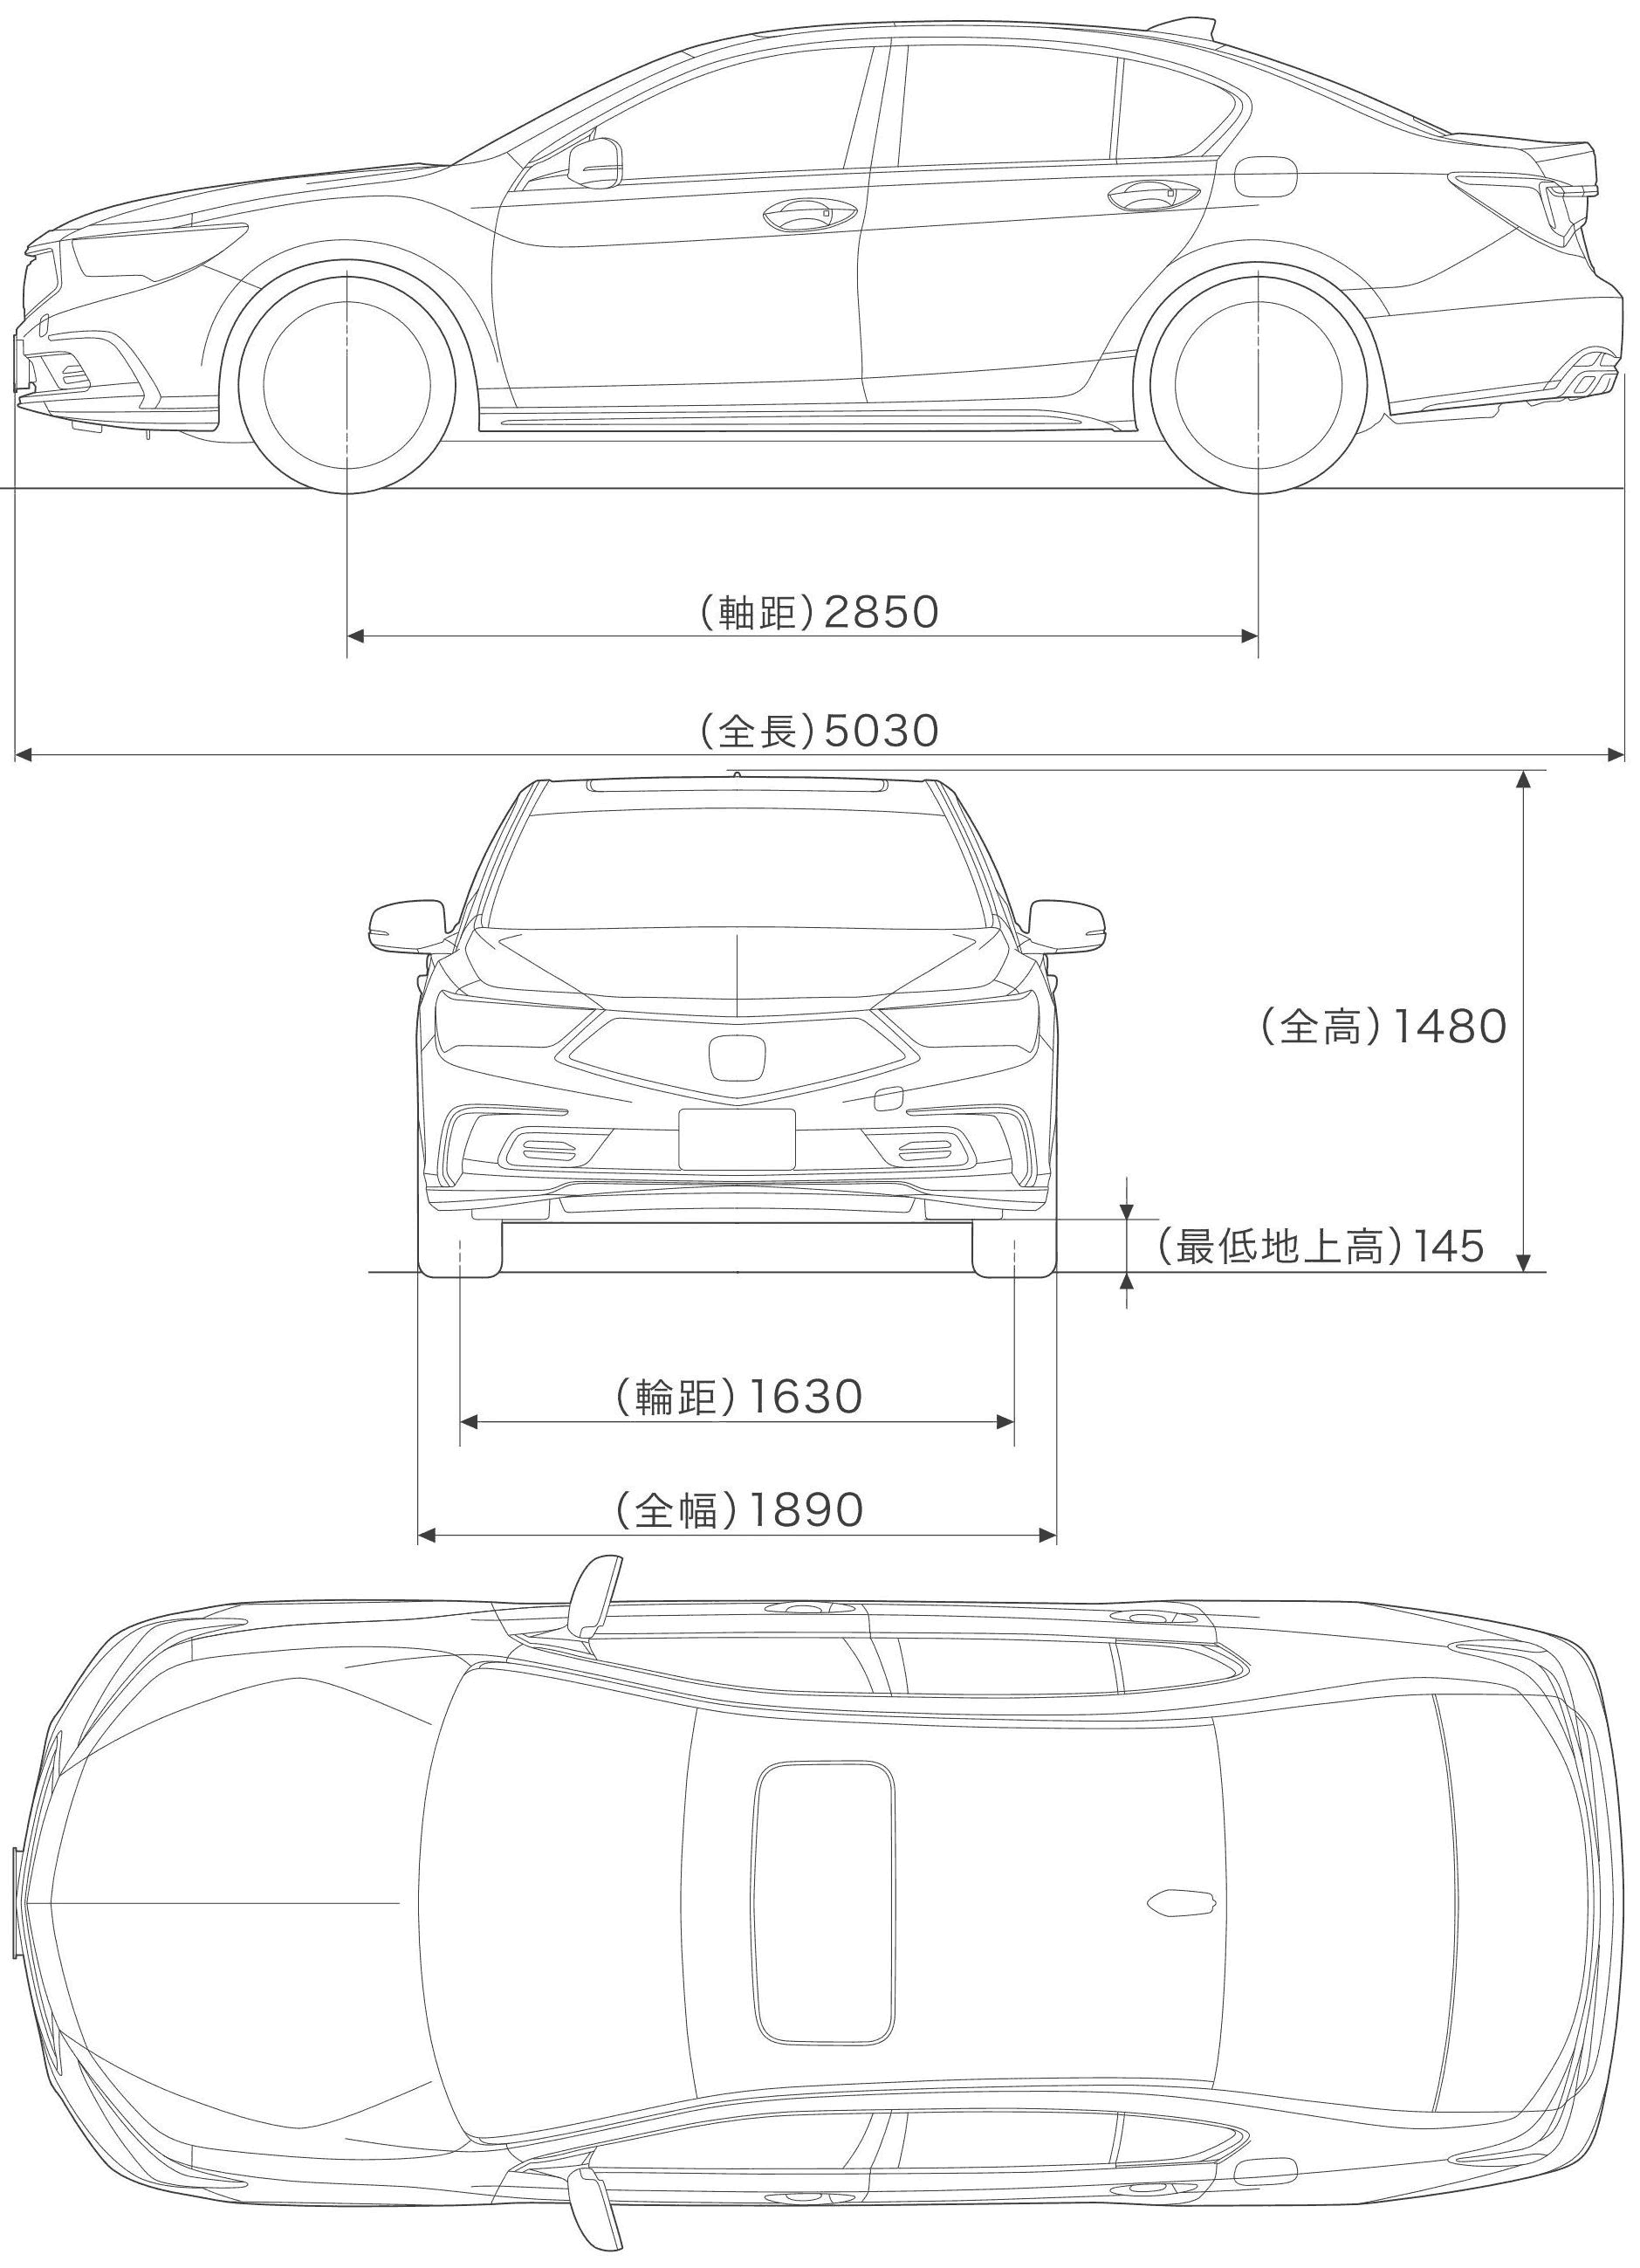 Honda Legend blueprint